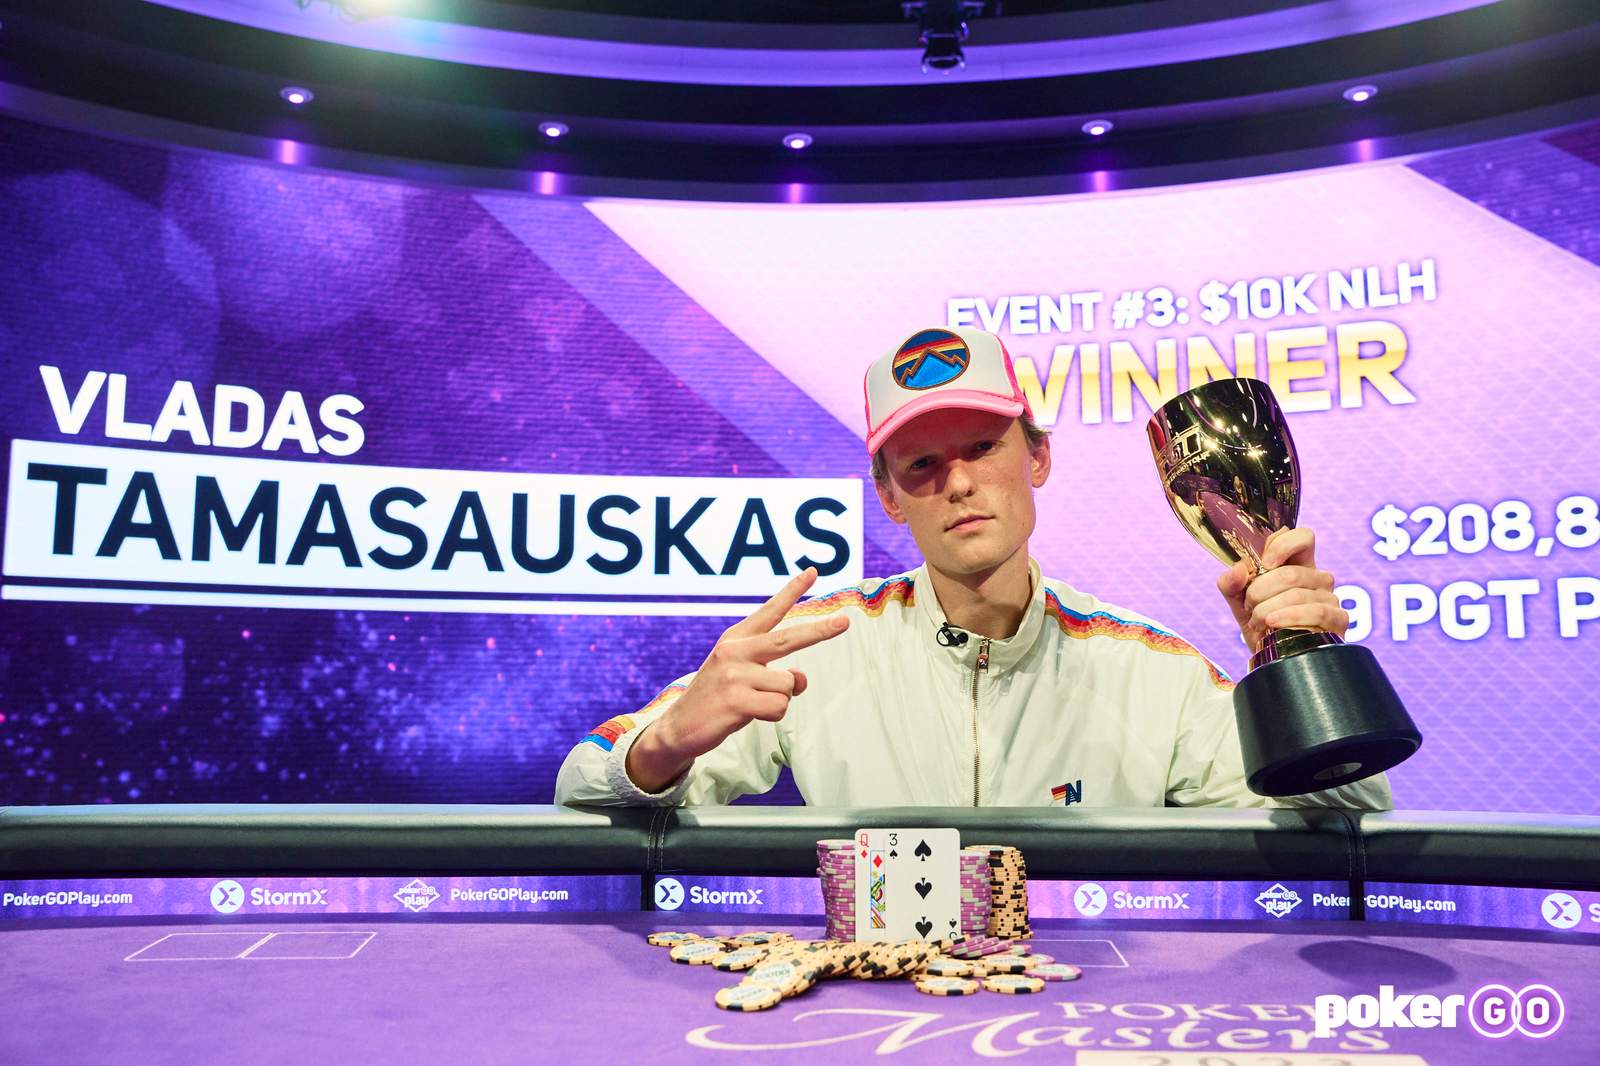 Vladas Tamasauskas Wins Poker Masters Event #3 for $208,800